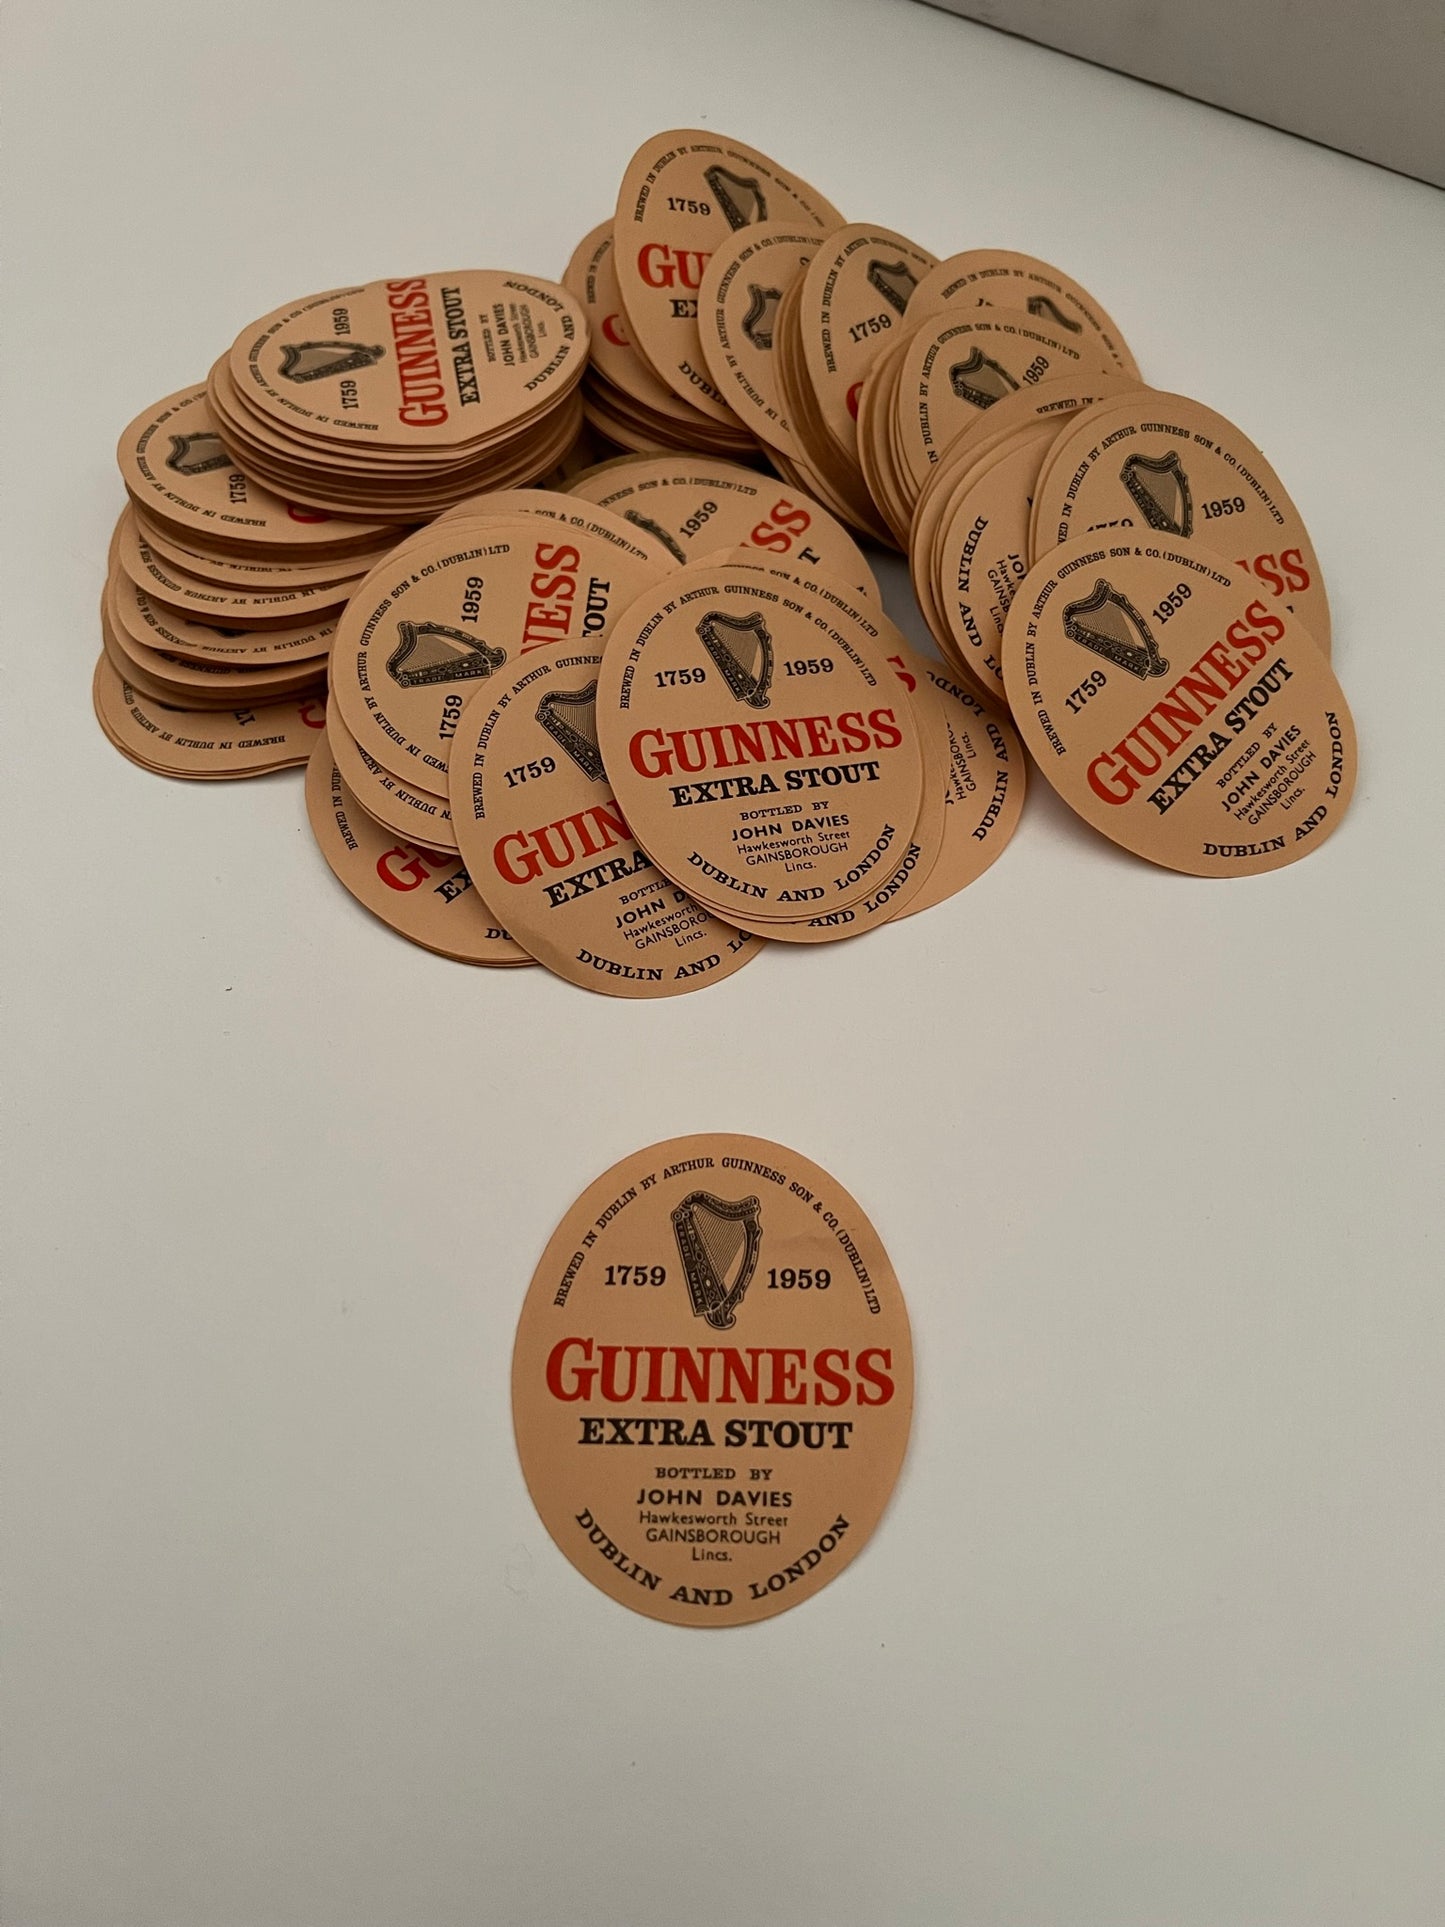 20x Unused Vintage Guinness Extra Stout Bottle Label 1959 Bottled by John Davies, Gainsborough